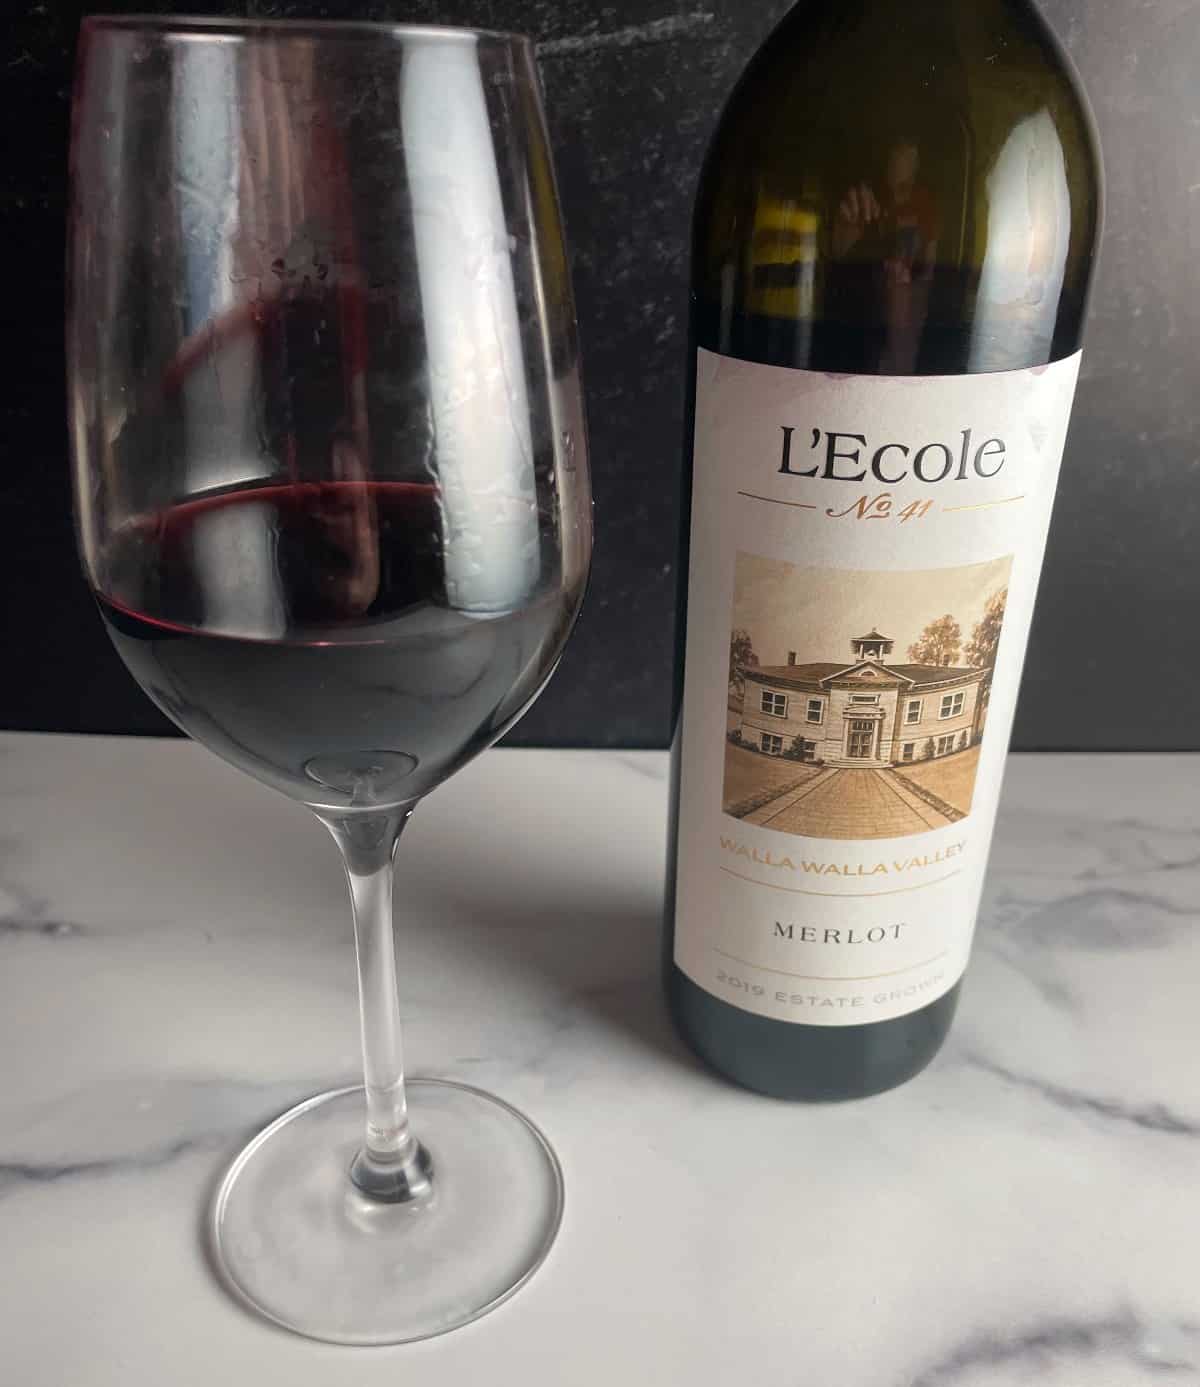 Bottle of L'Ecole No. 41 Walla Walla Merlot with a glass of the red wine alongside the bottle.